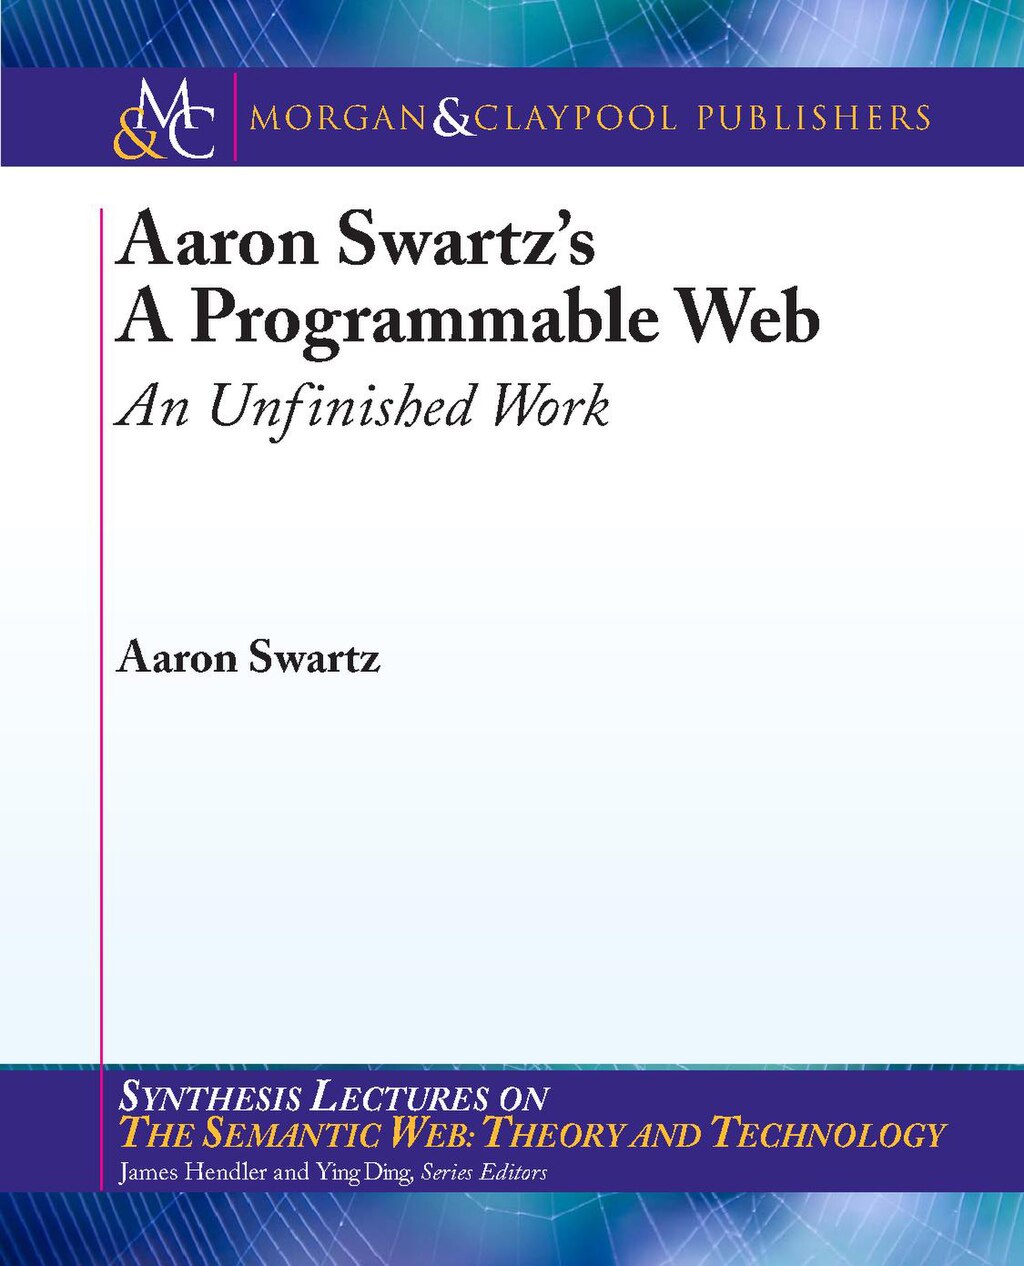 Aaron Swartz - Wikipedia